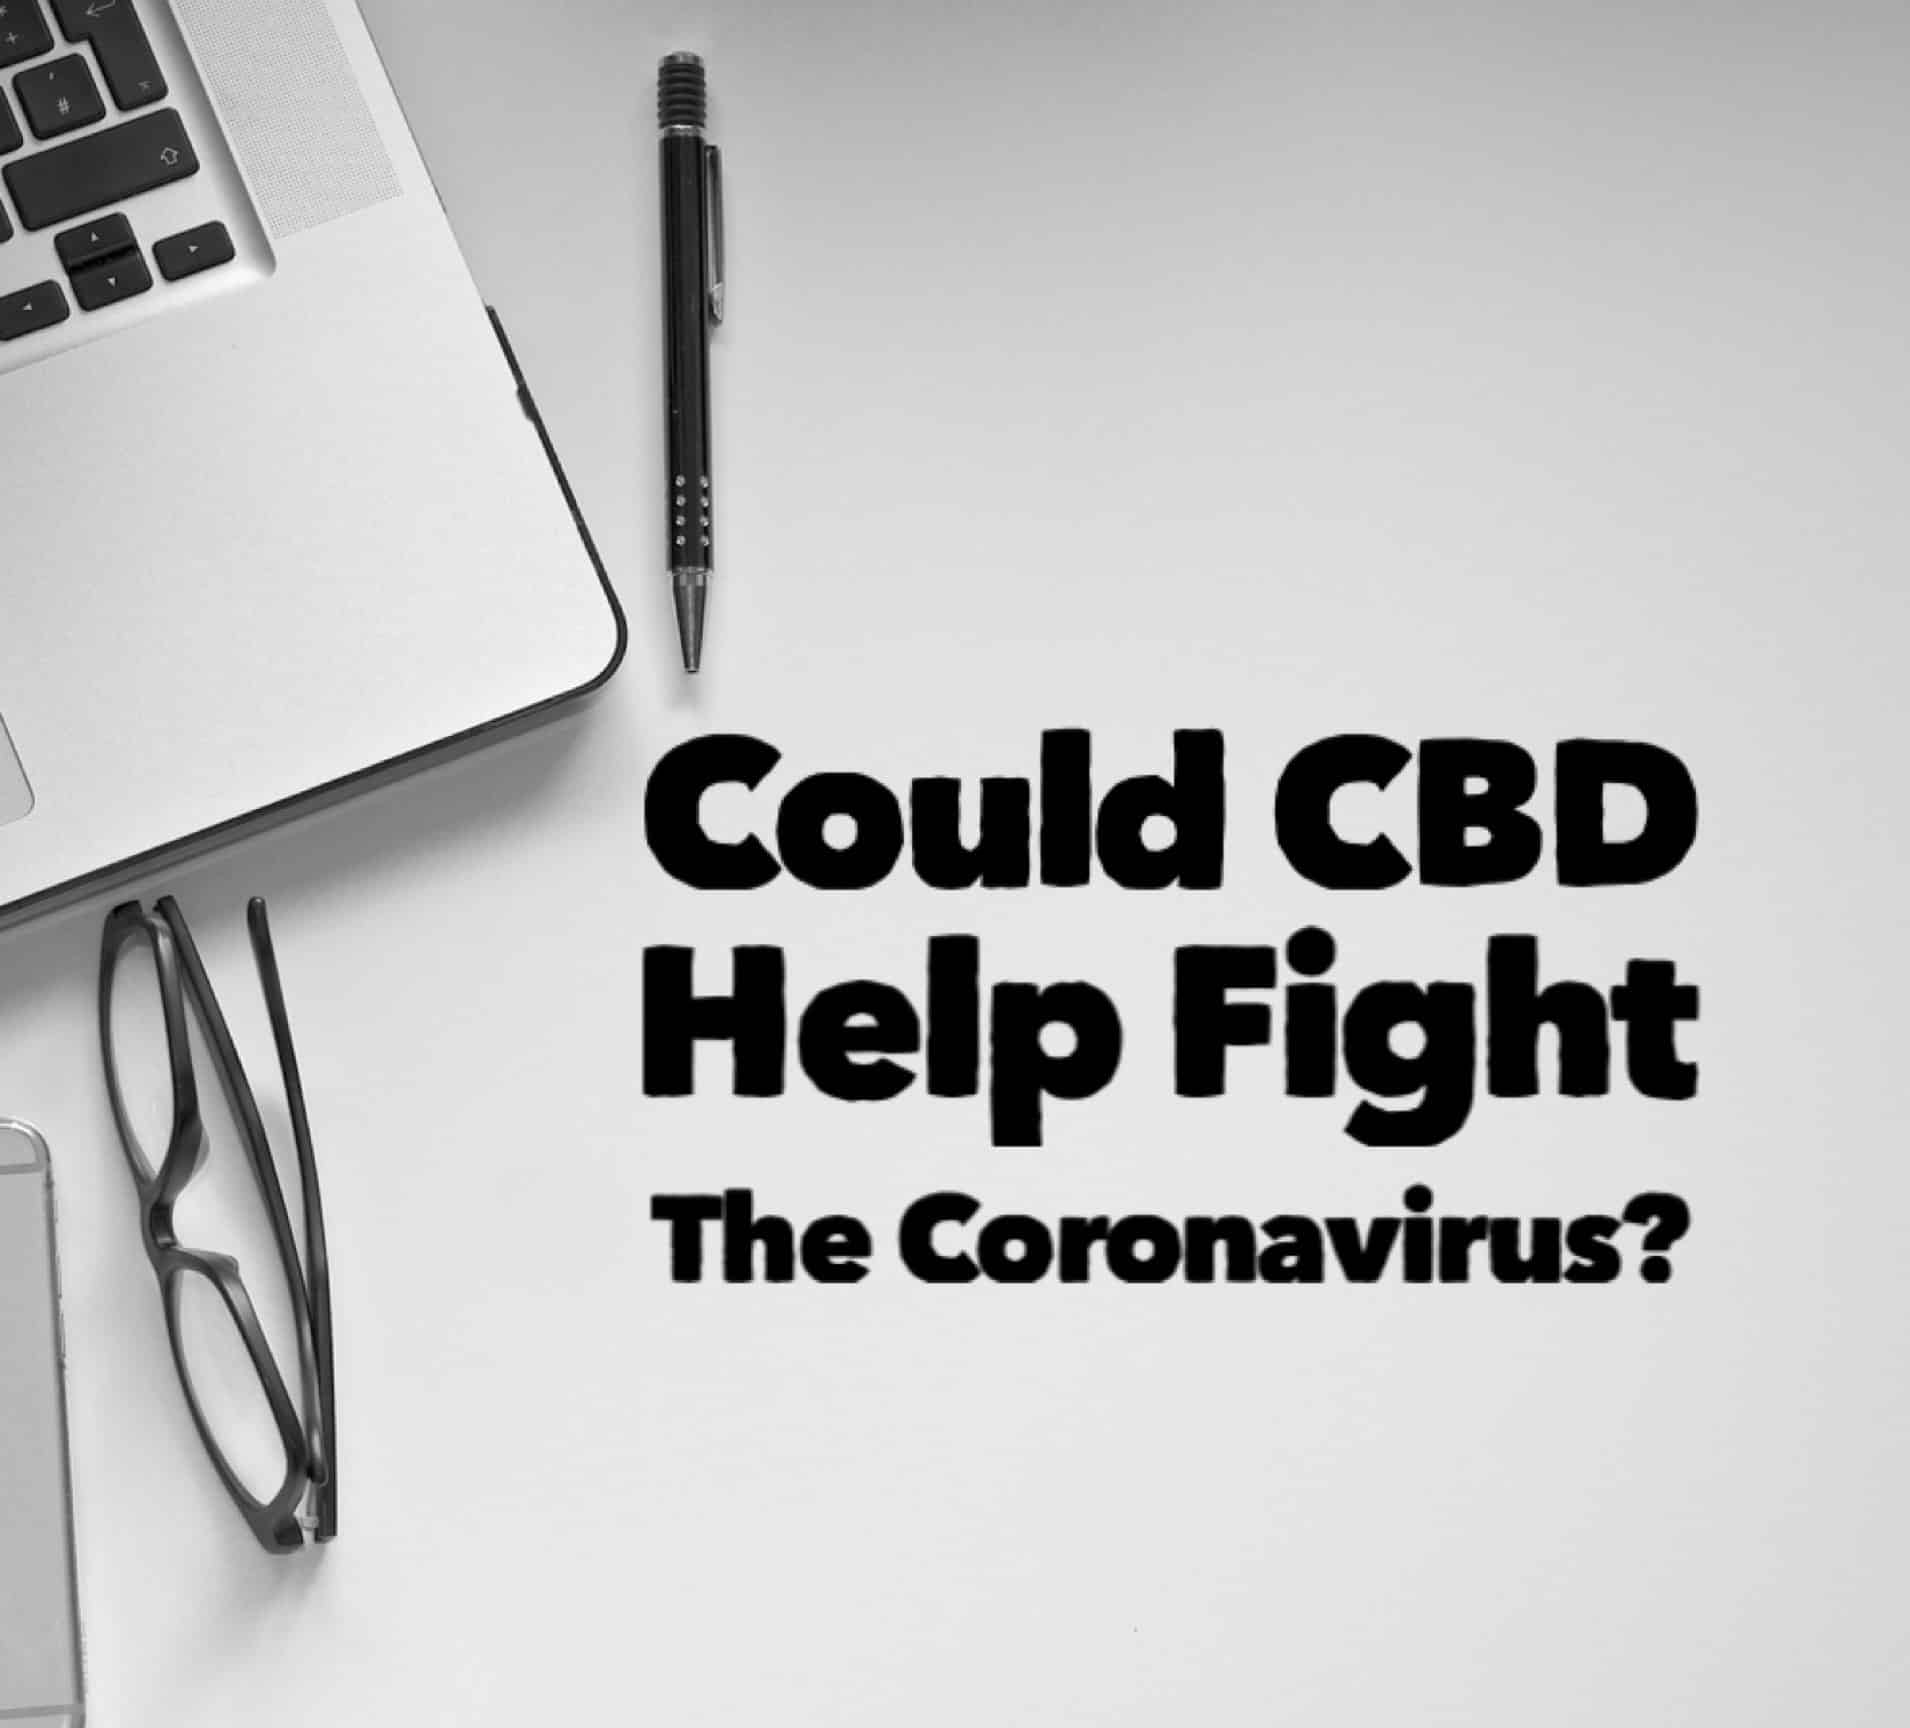 Could CBD Help Fight the Coronavirus?